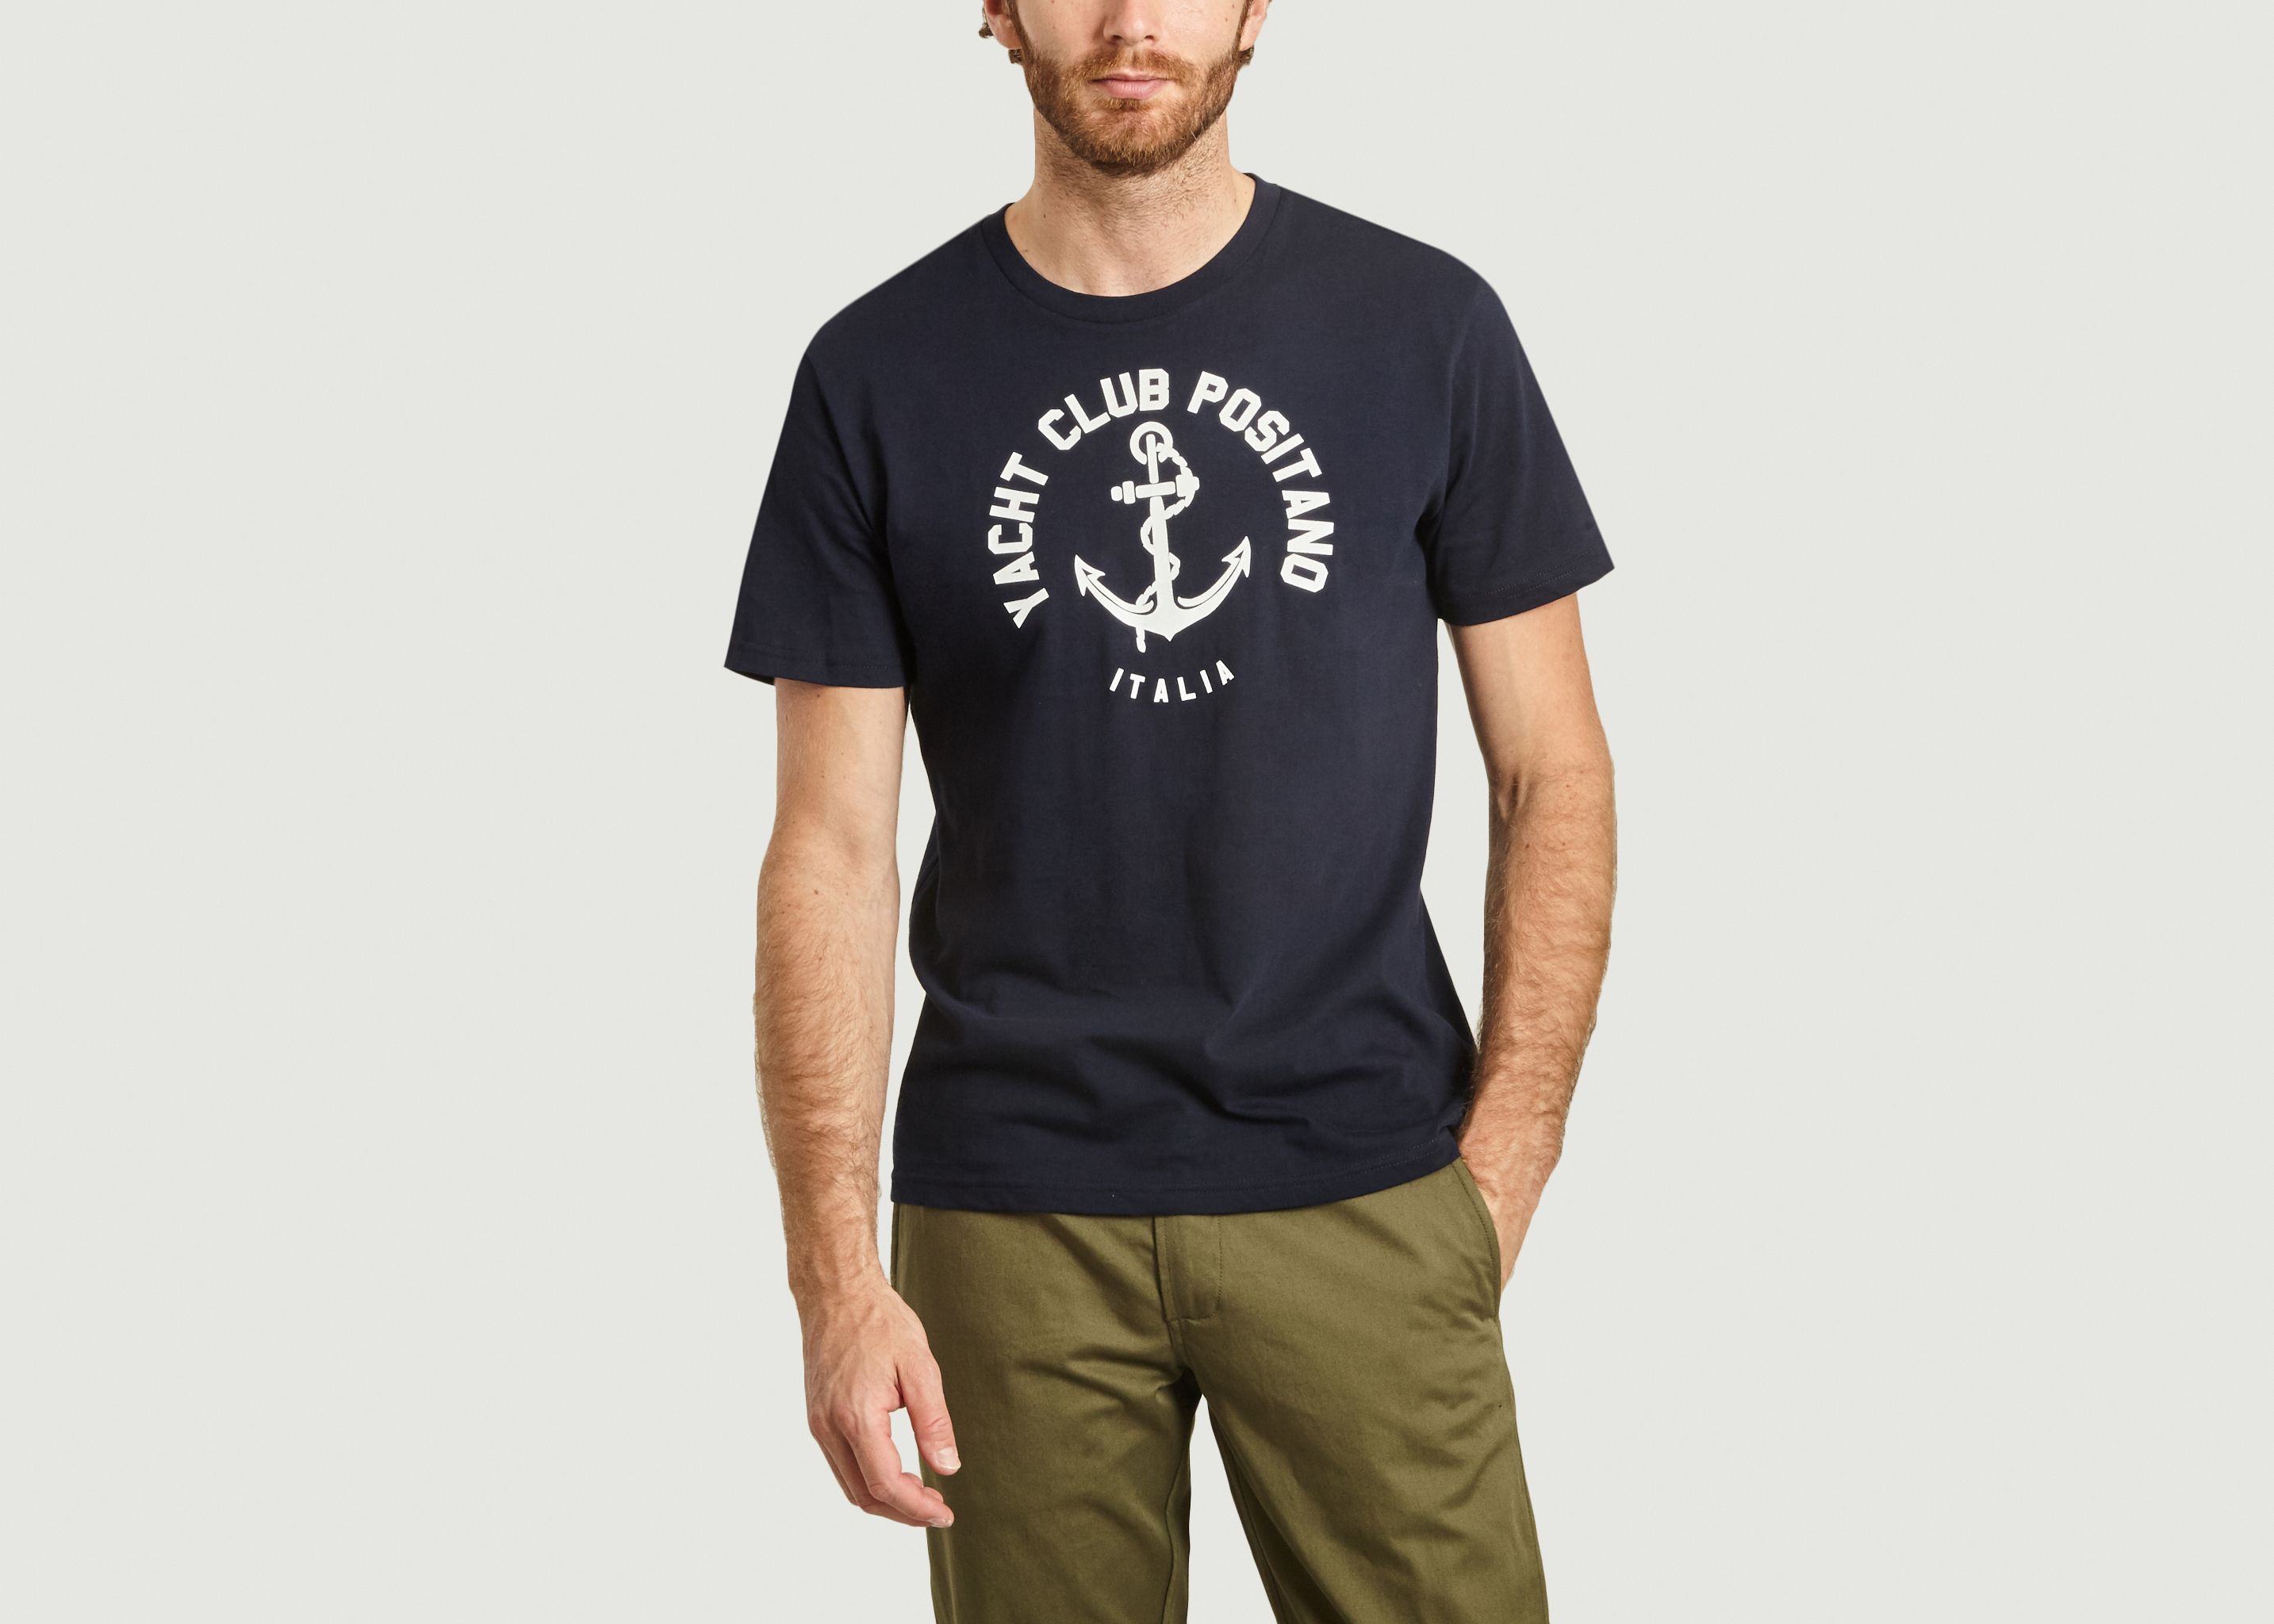 Yacht Club Positano Italia printed t-shirt - Harmony